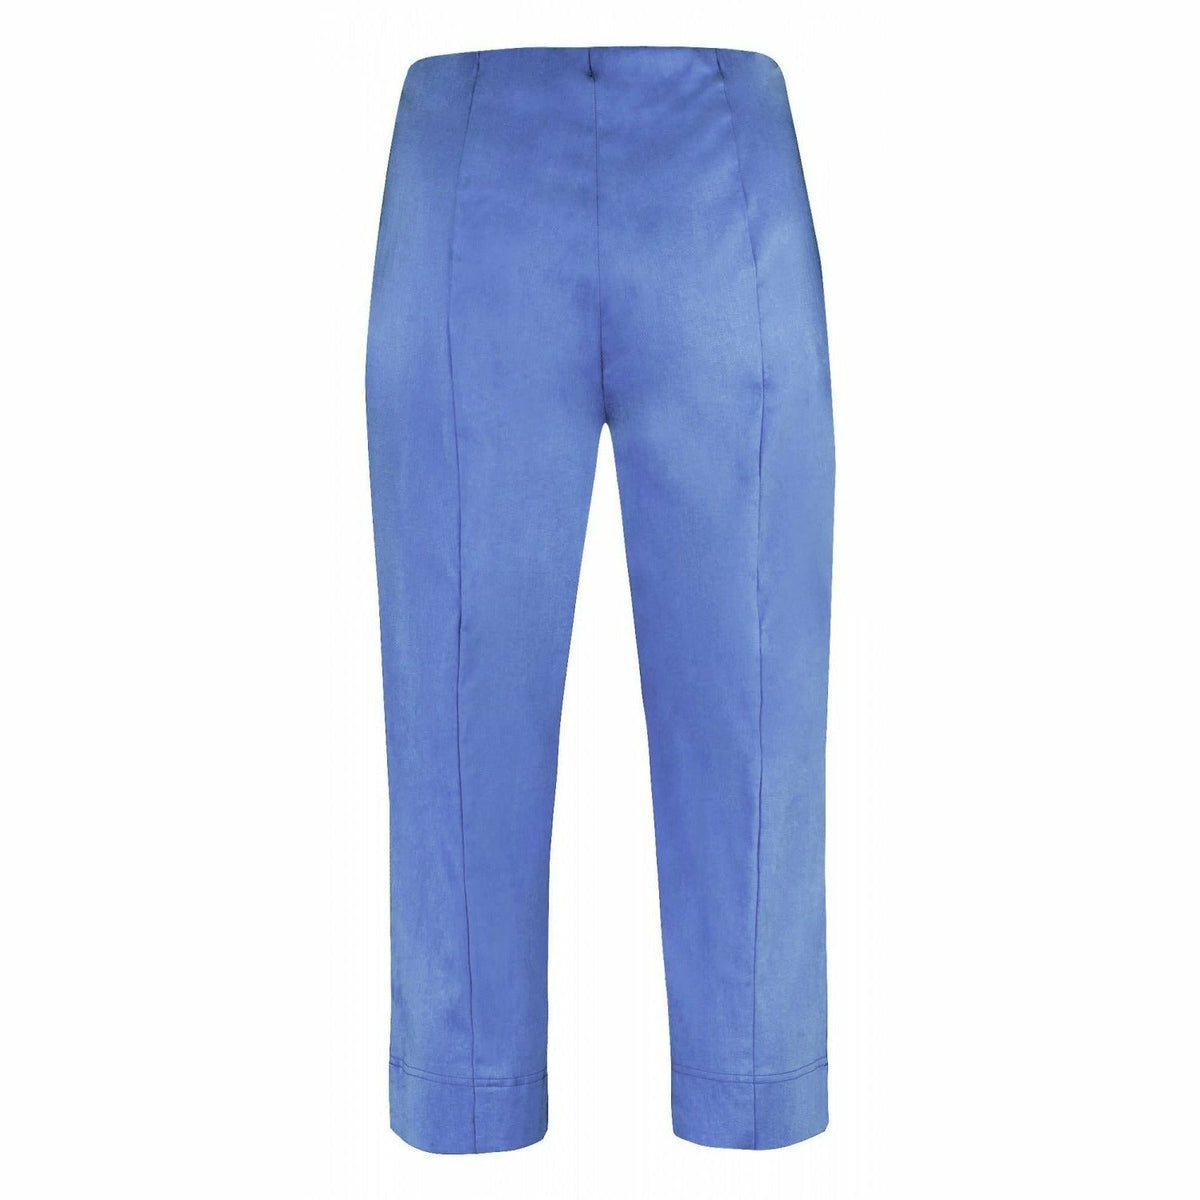 Robell Crop Trousers | Cornflower Blue - Wardrobe Plus